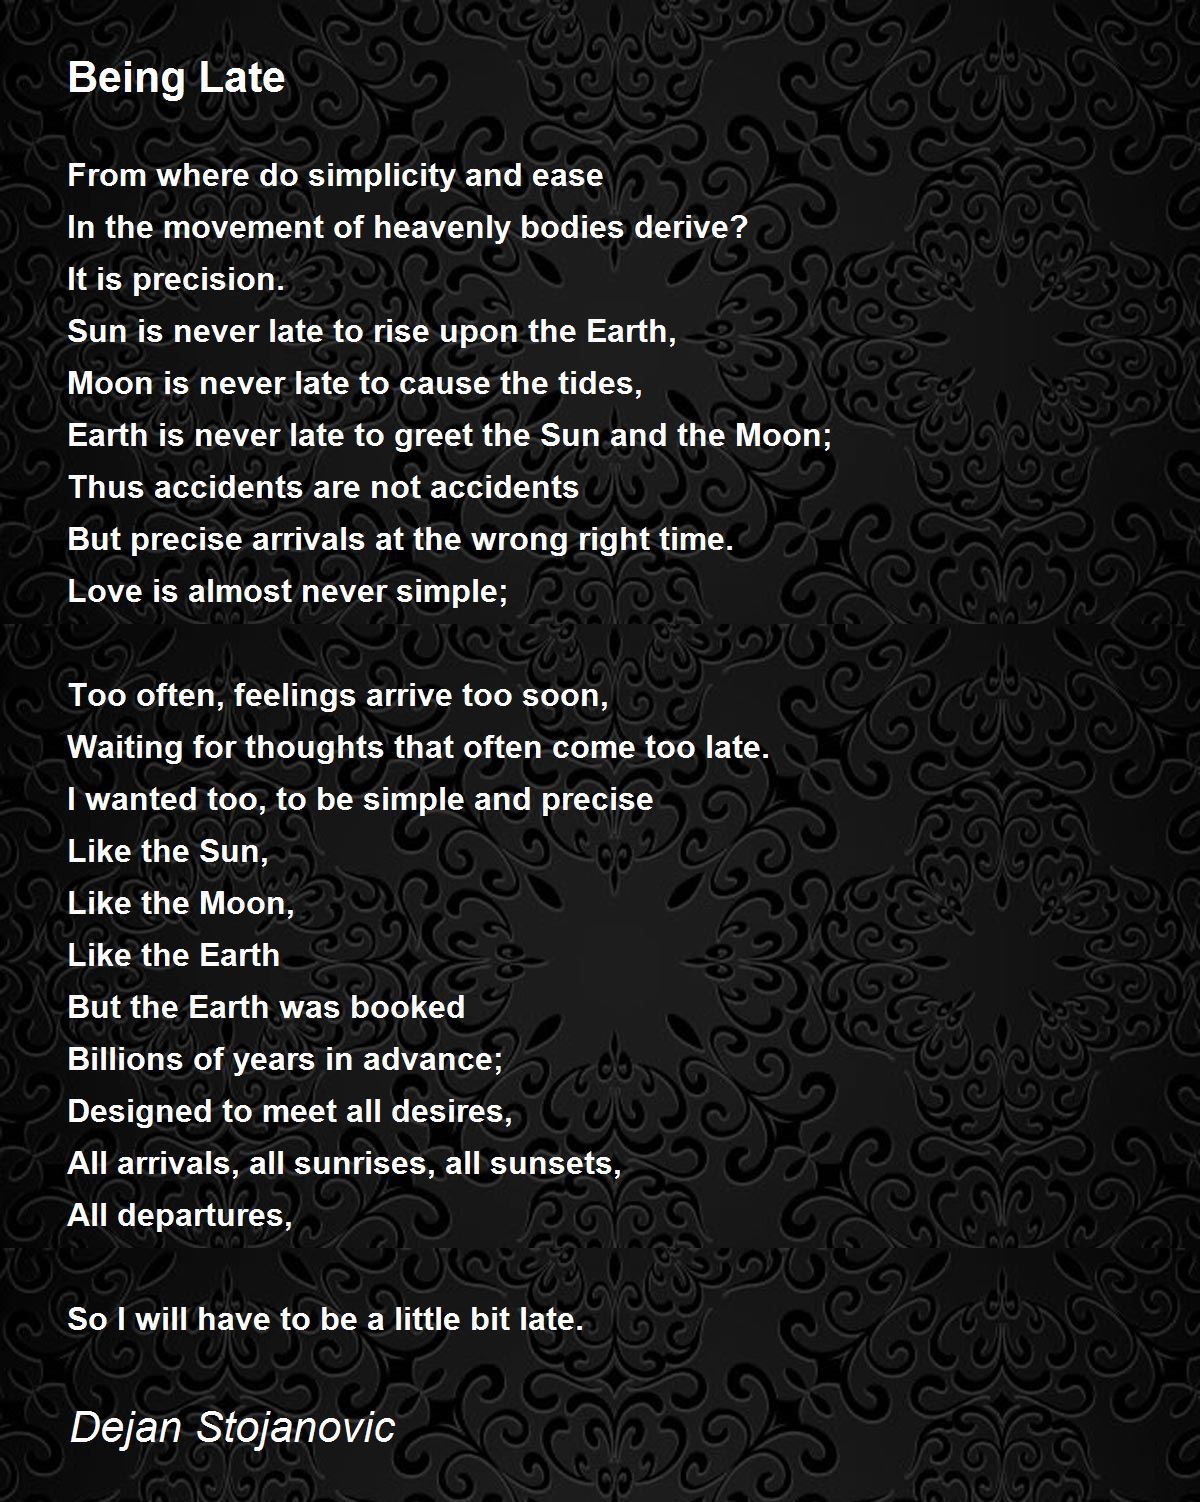 Being Late Poem by Dejan Stojanovic - Poem Hunter